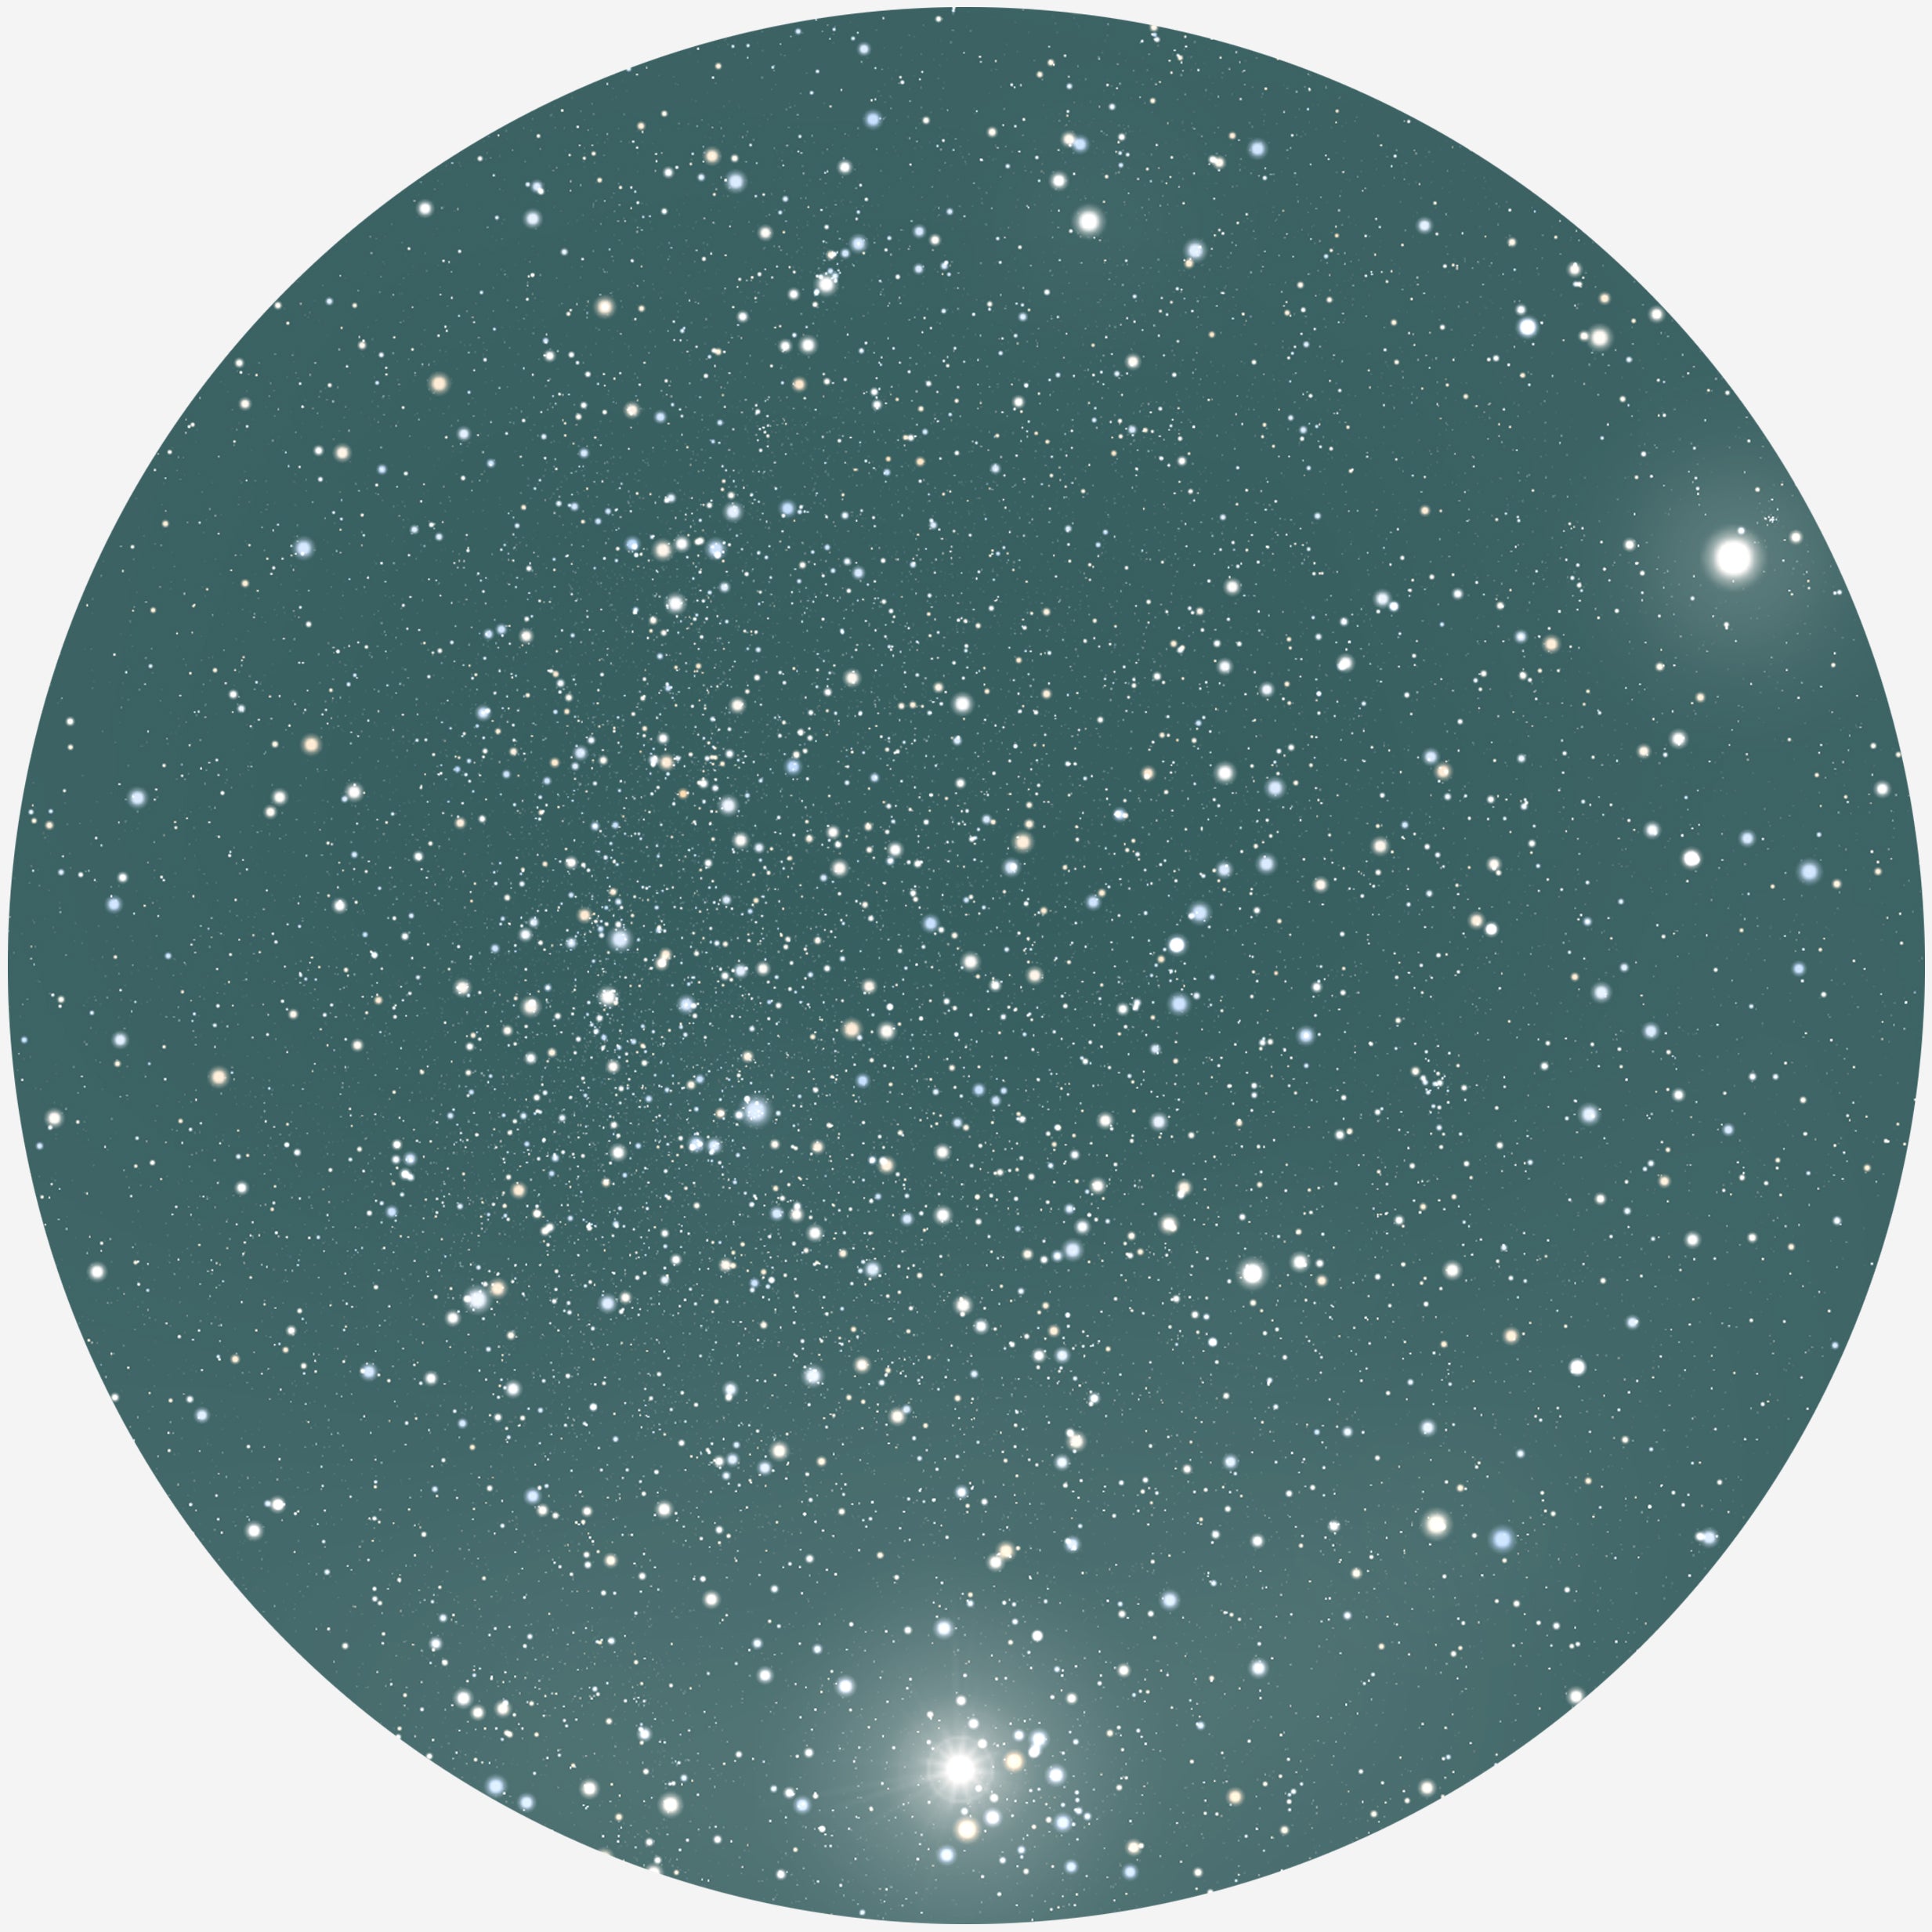 Se RUND PLAKAT MED PERSONLIG STJERNEHIMMEL (MØRKEGRØN) - 20 cm / Klar stjernehimmel hos KISPUS